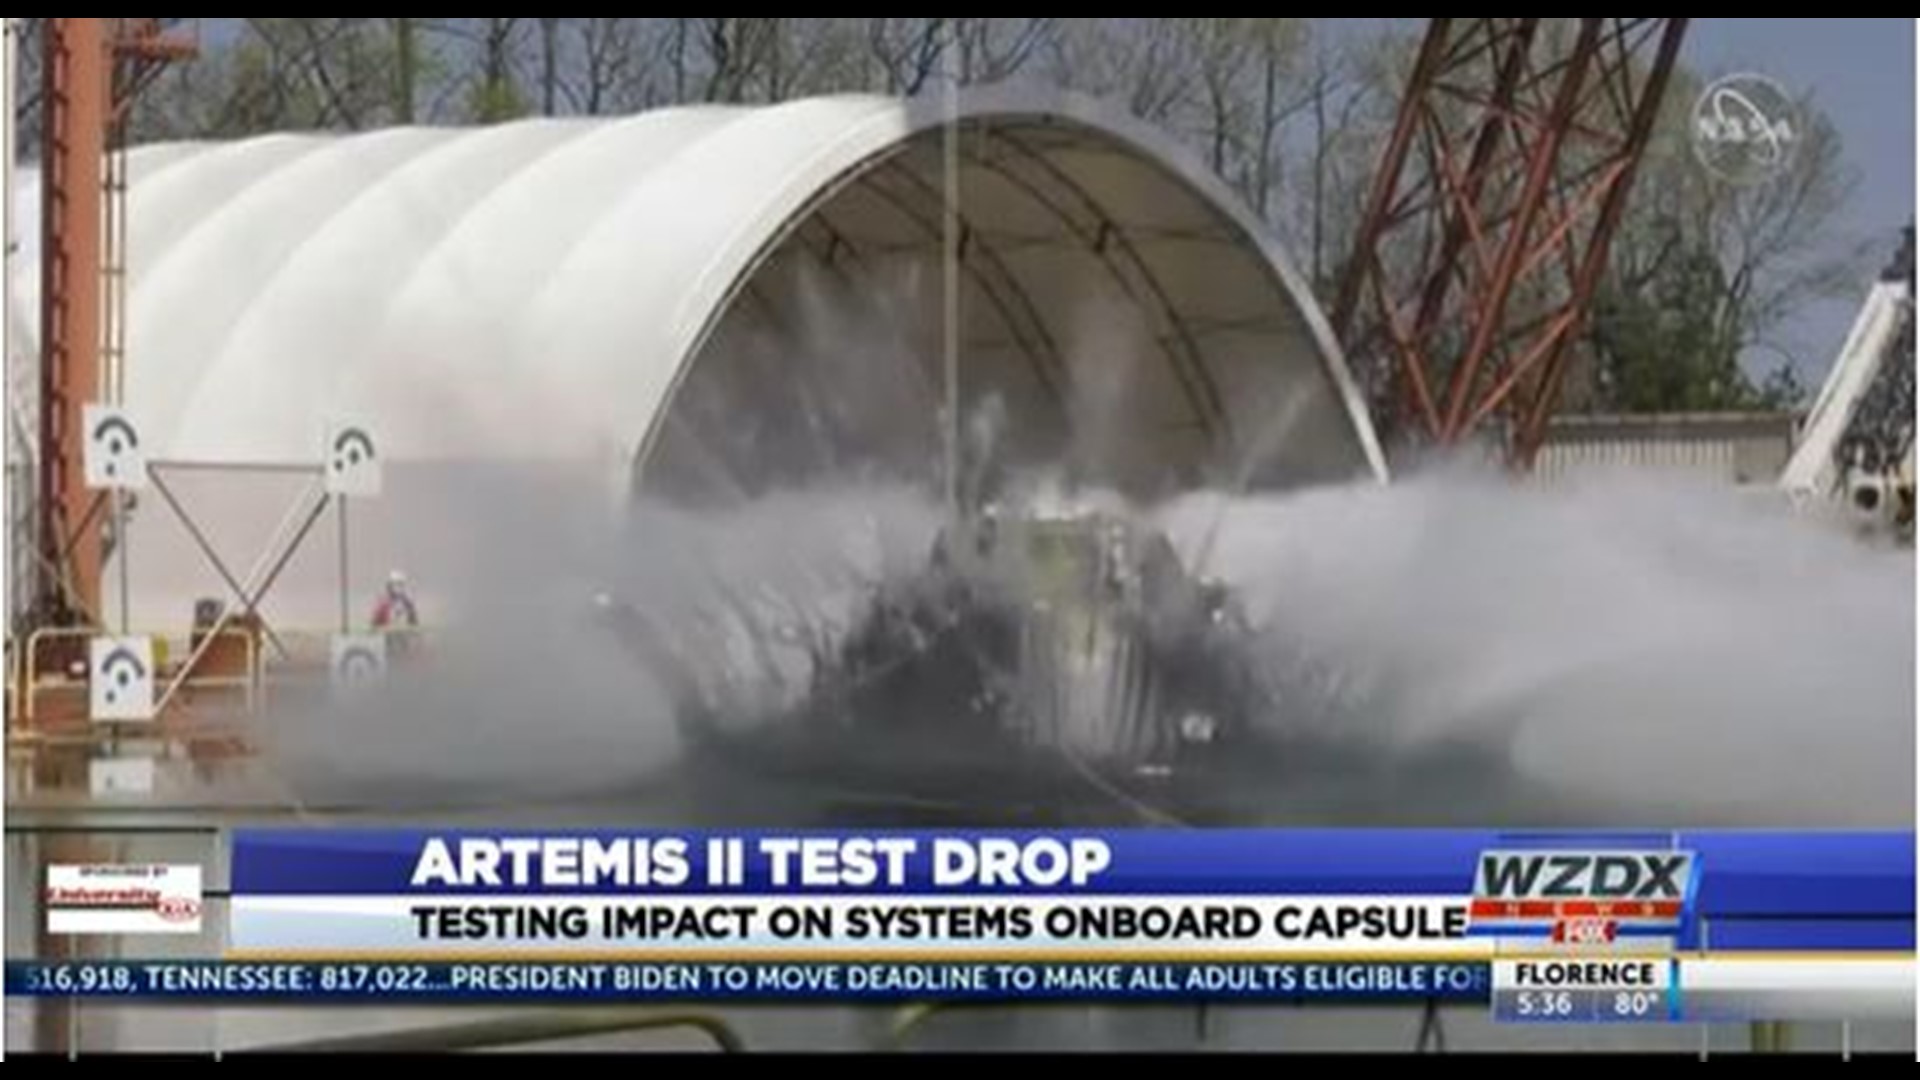 NASA successfully water-tested its Artemis II space craft in Virginia.